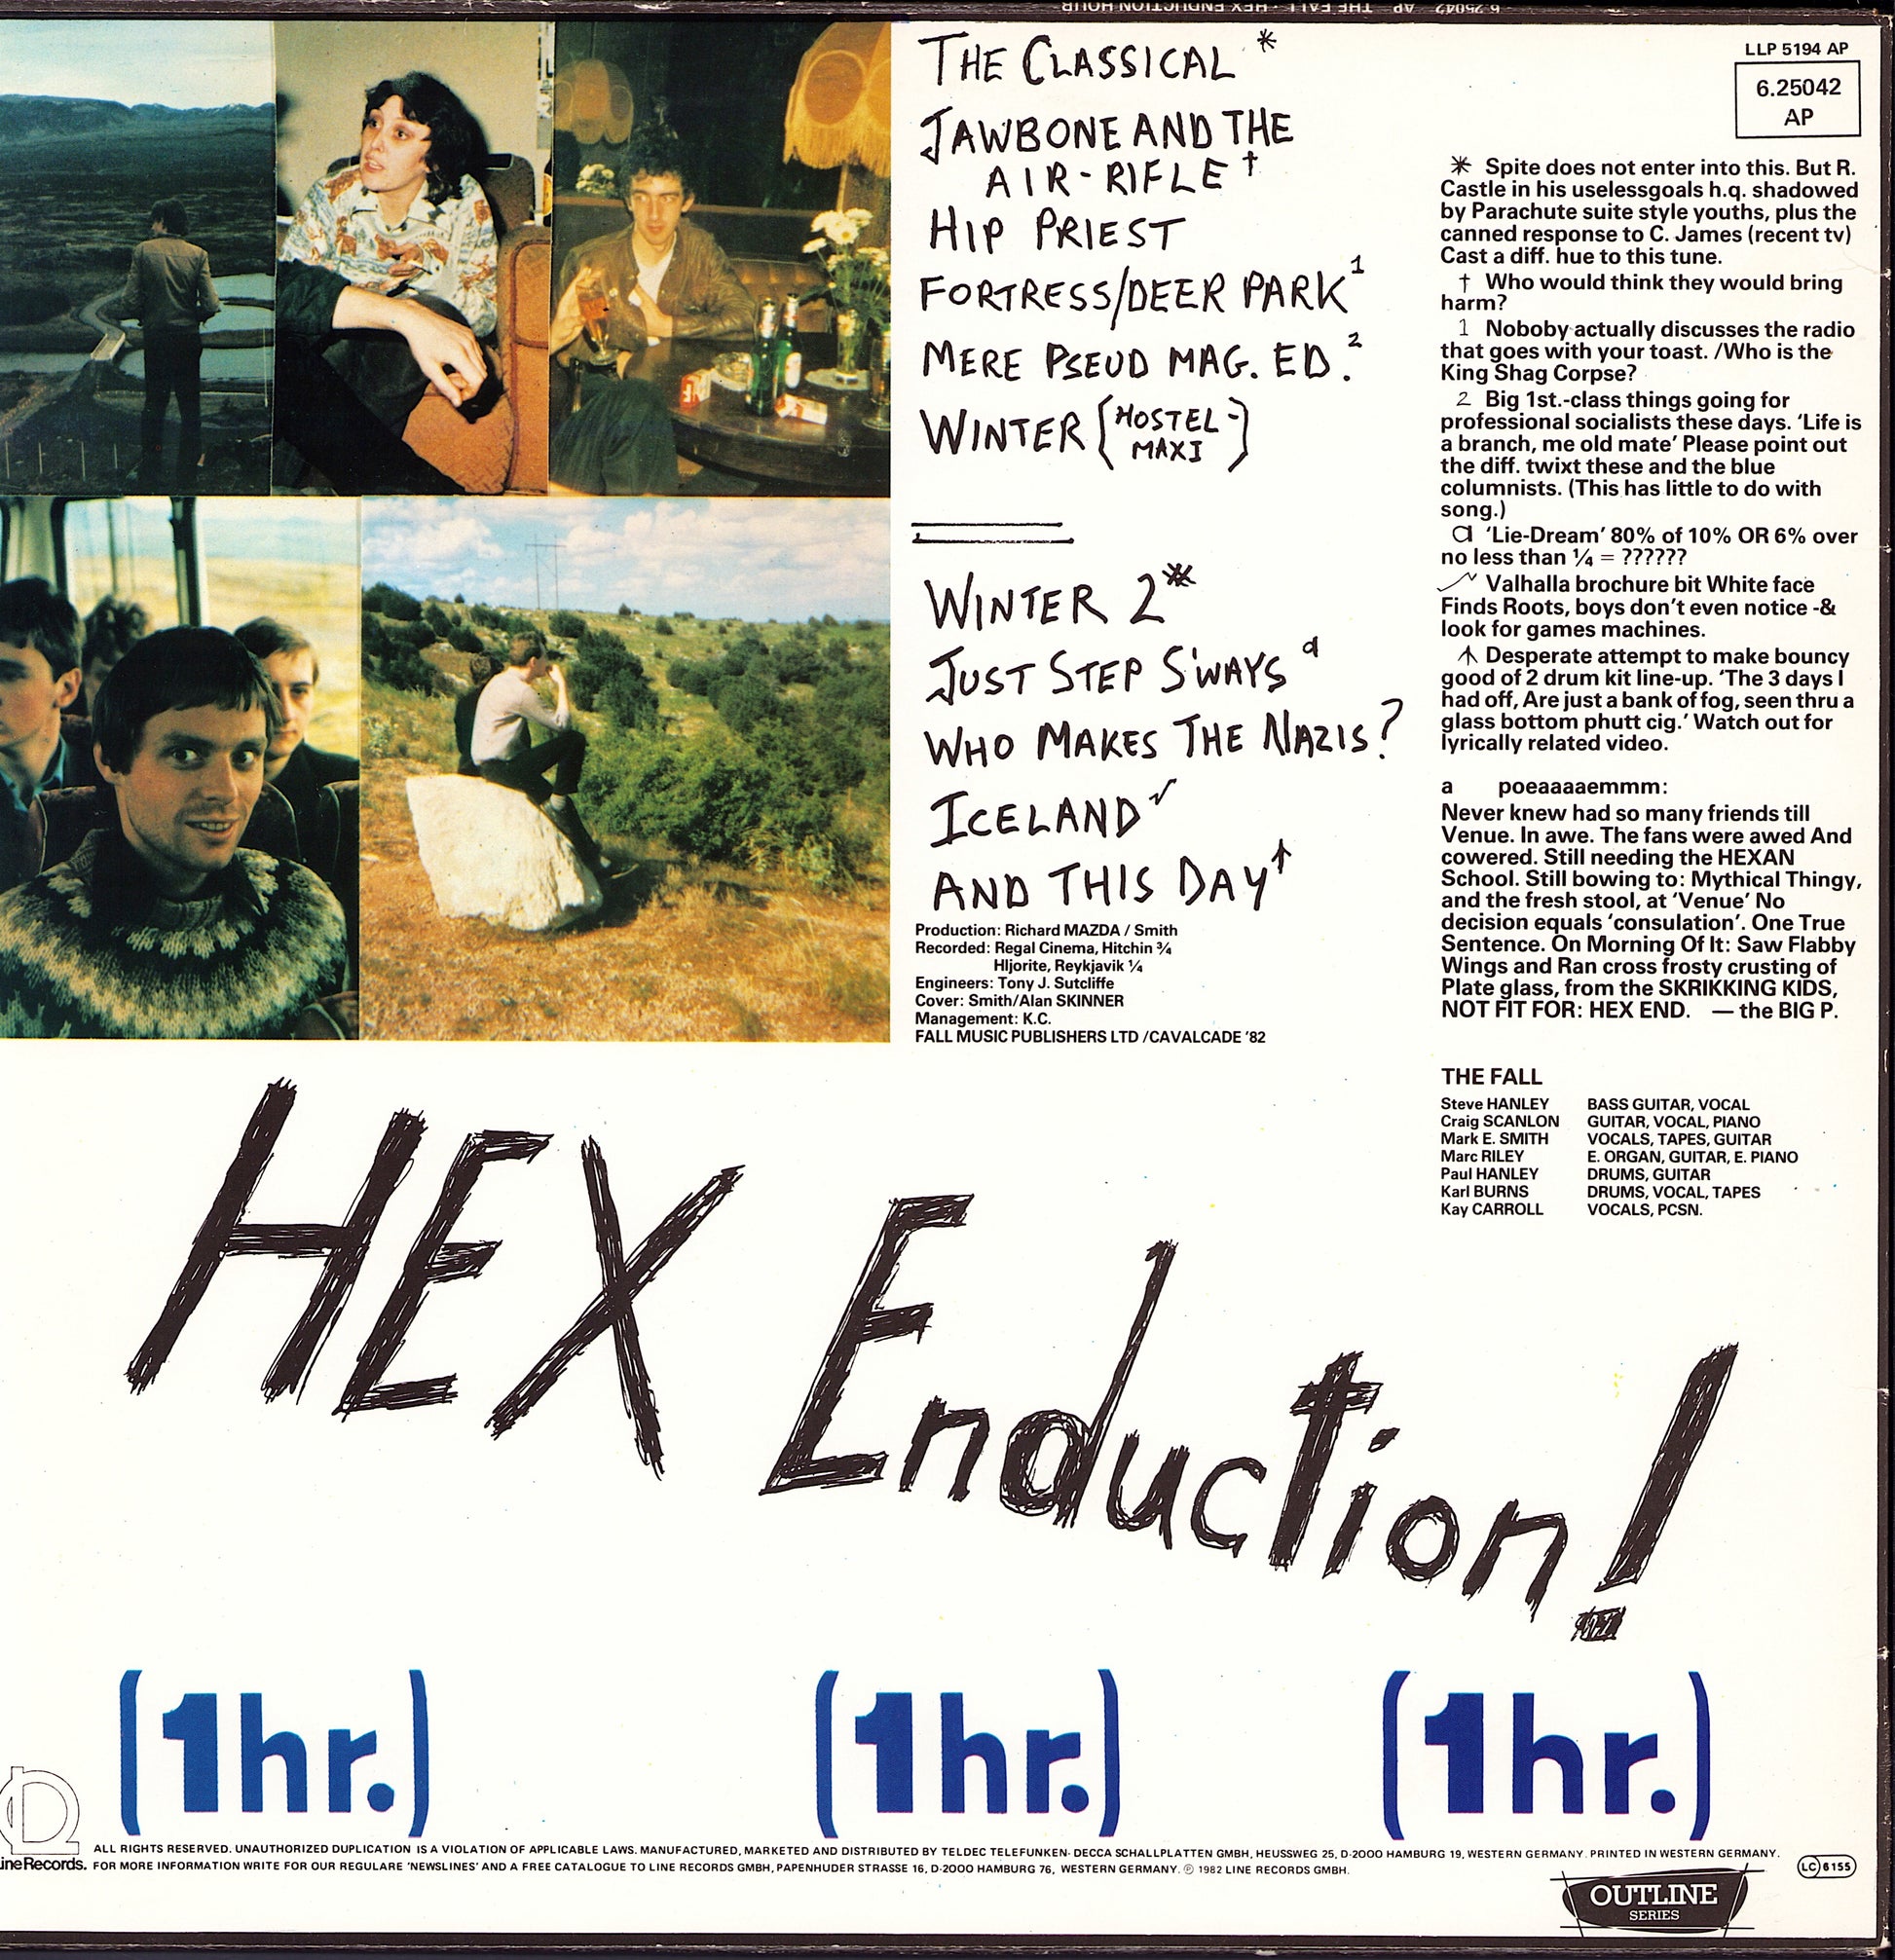 The Fall ‎- Hex Enduction Hour Vinyl LP